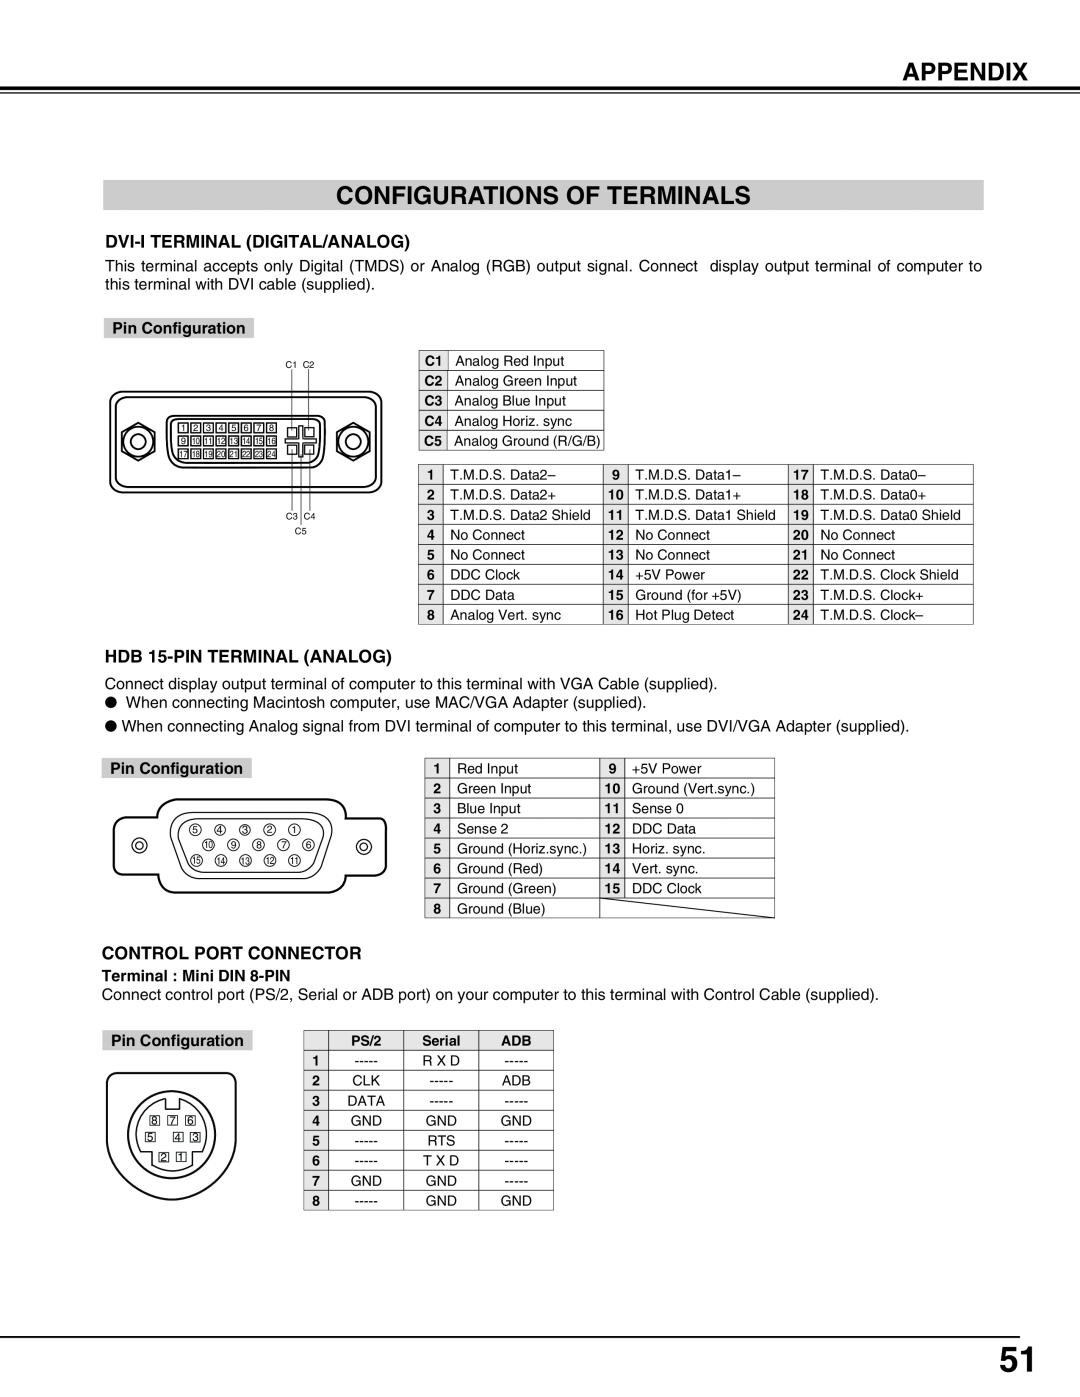 Eiki LC-UXT3 Appendix Configurations Of Terminals, Dvi-I Terminal Digital/Analog, HDB 15-PIN TERMINAL ANALOG 